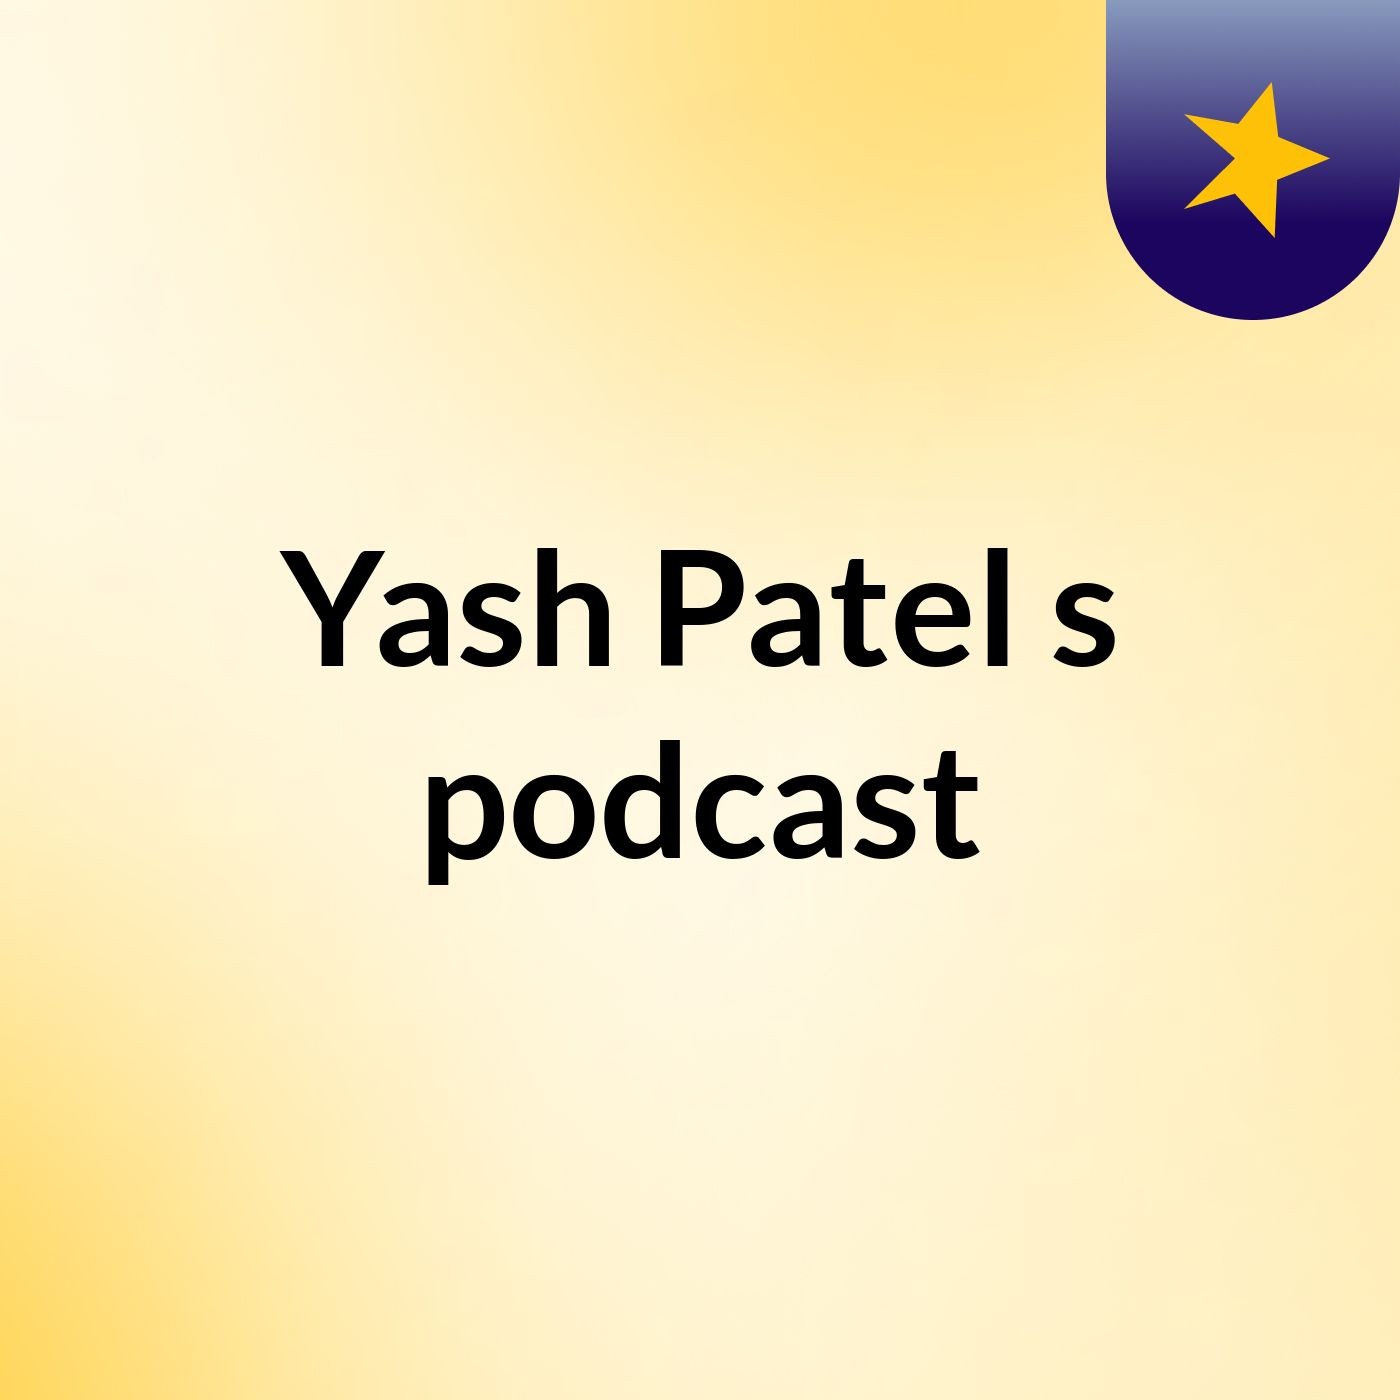 Yash Patel's podcast